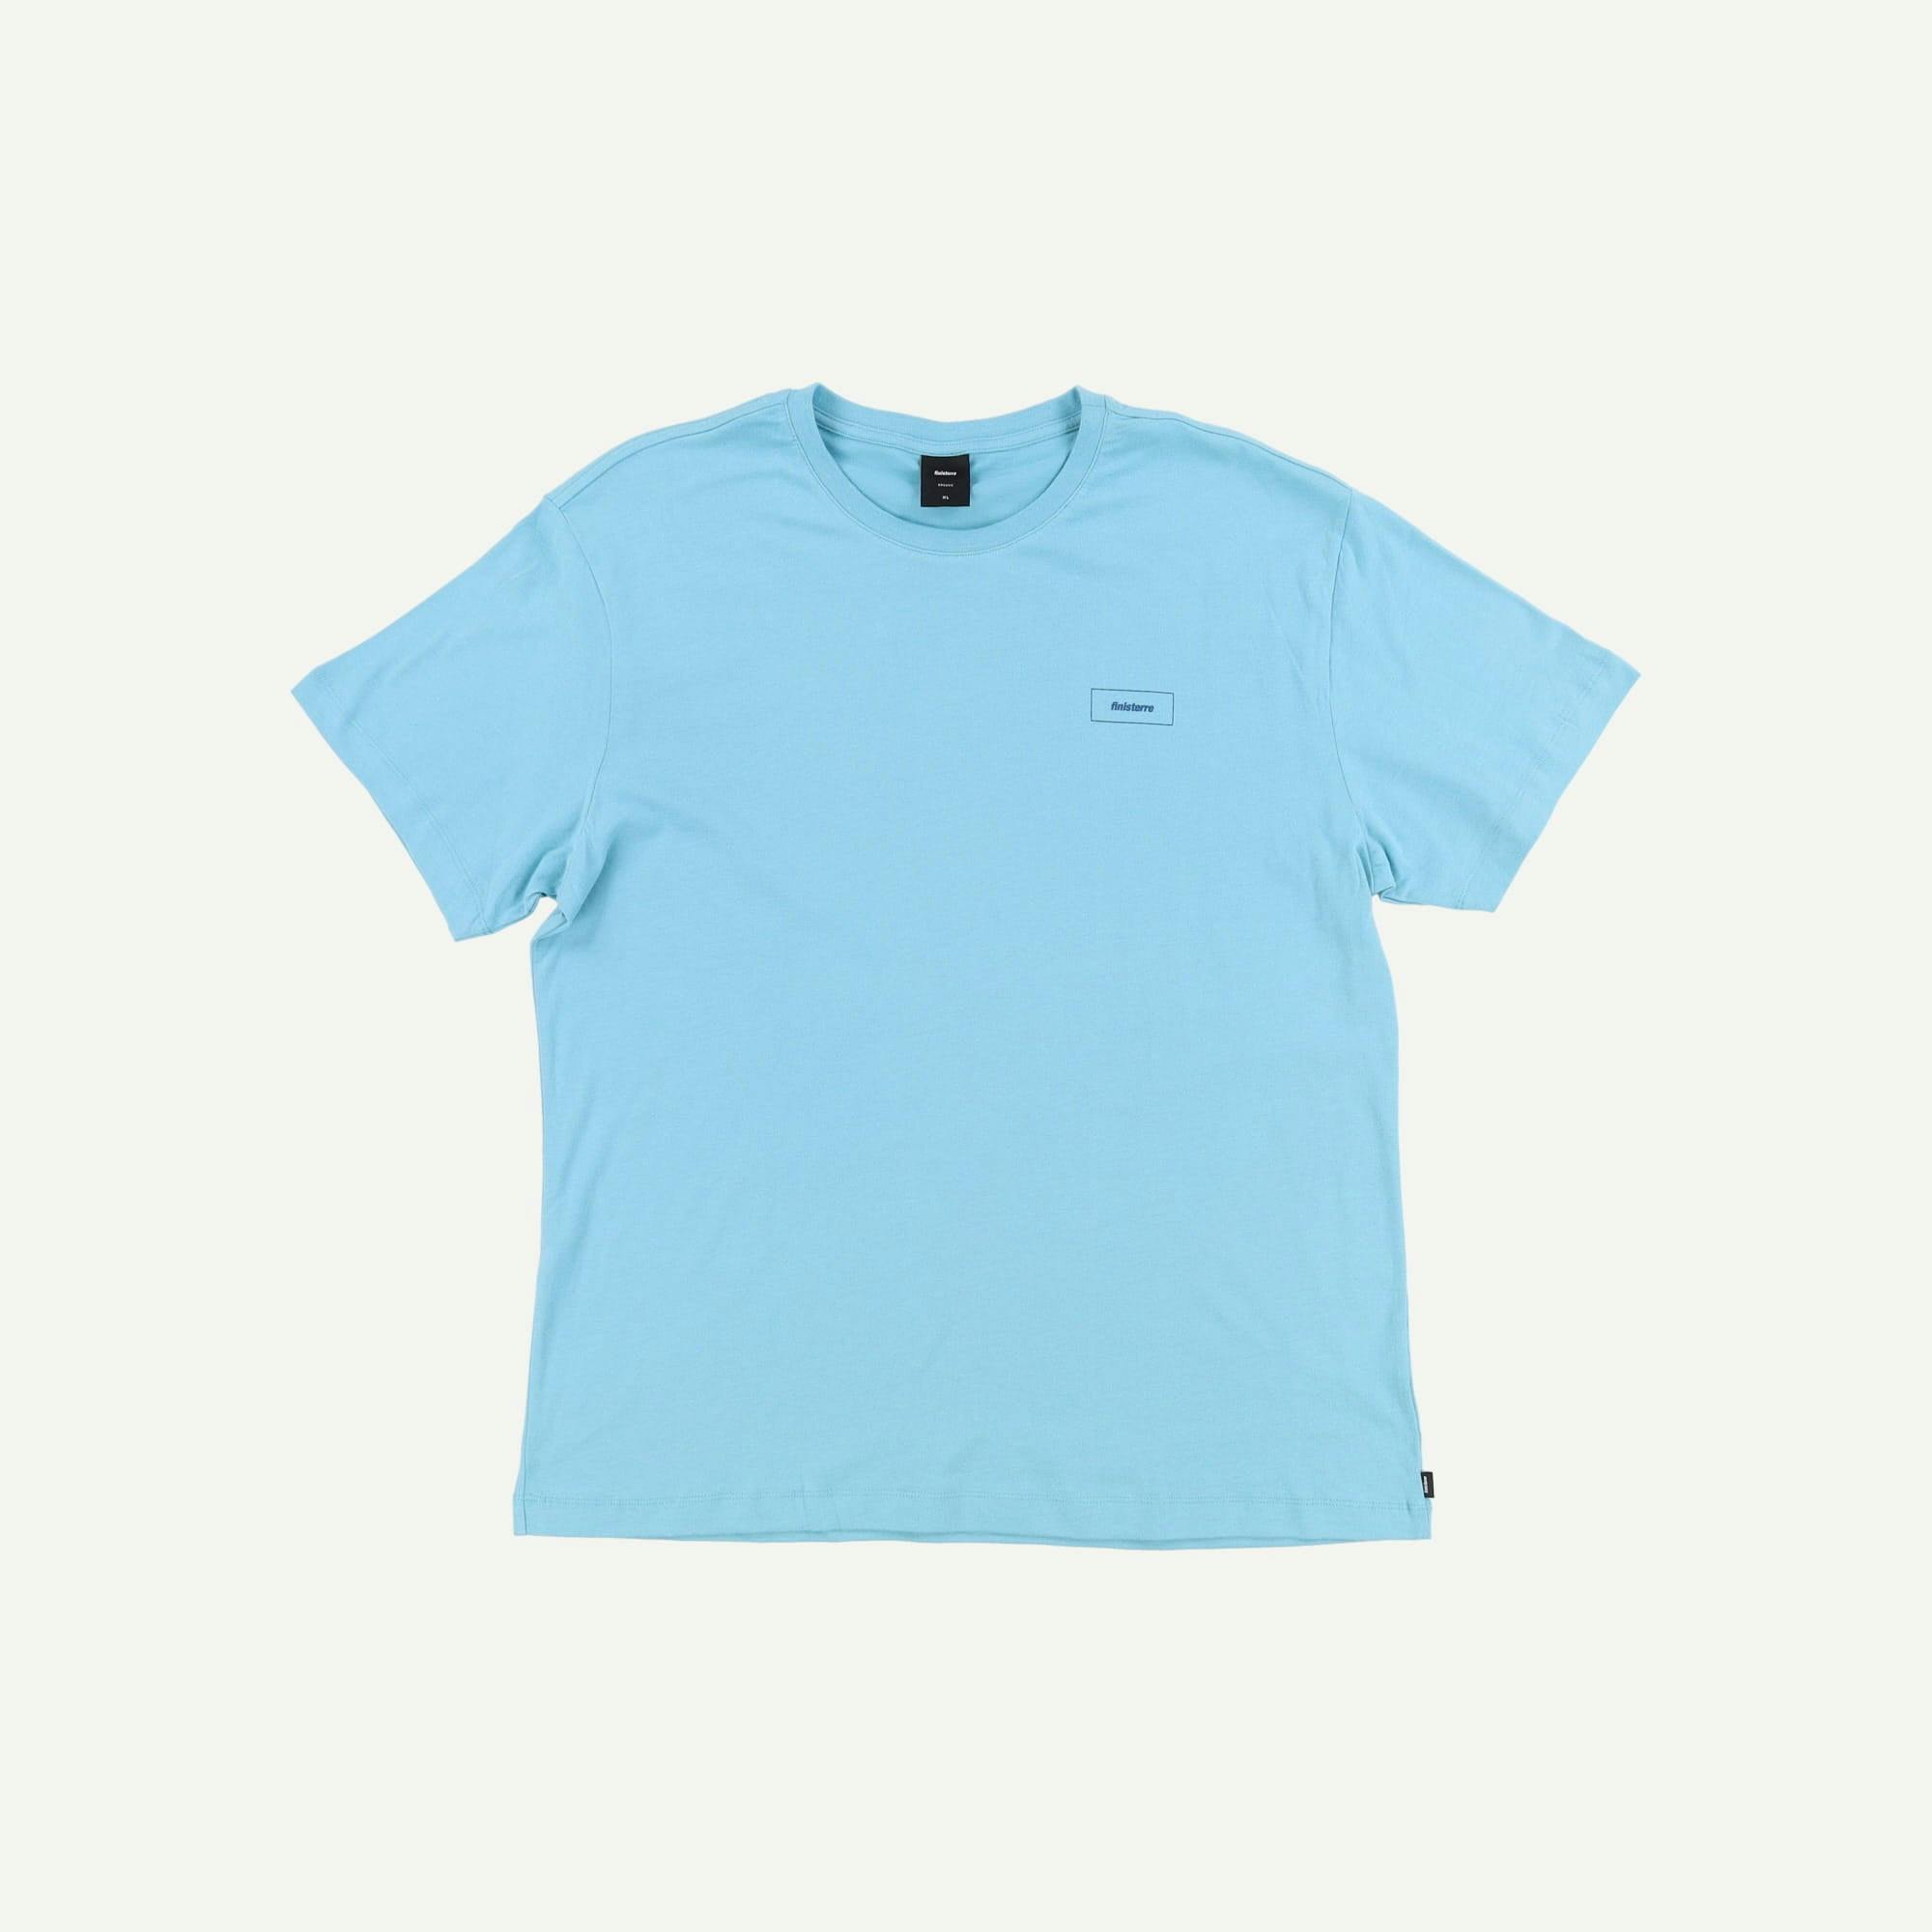 Finisterre Brand new Aqua T-shirt